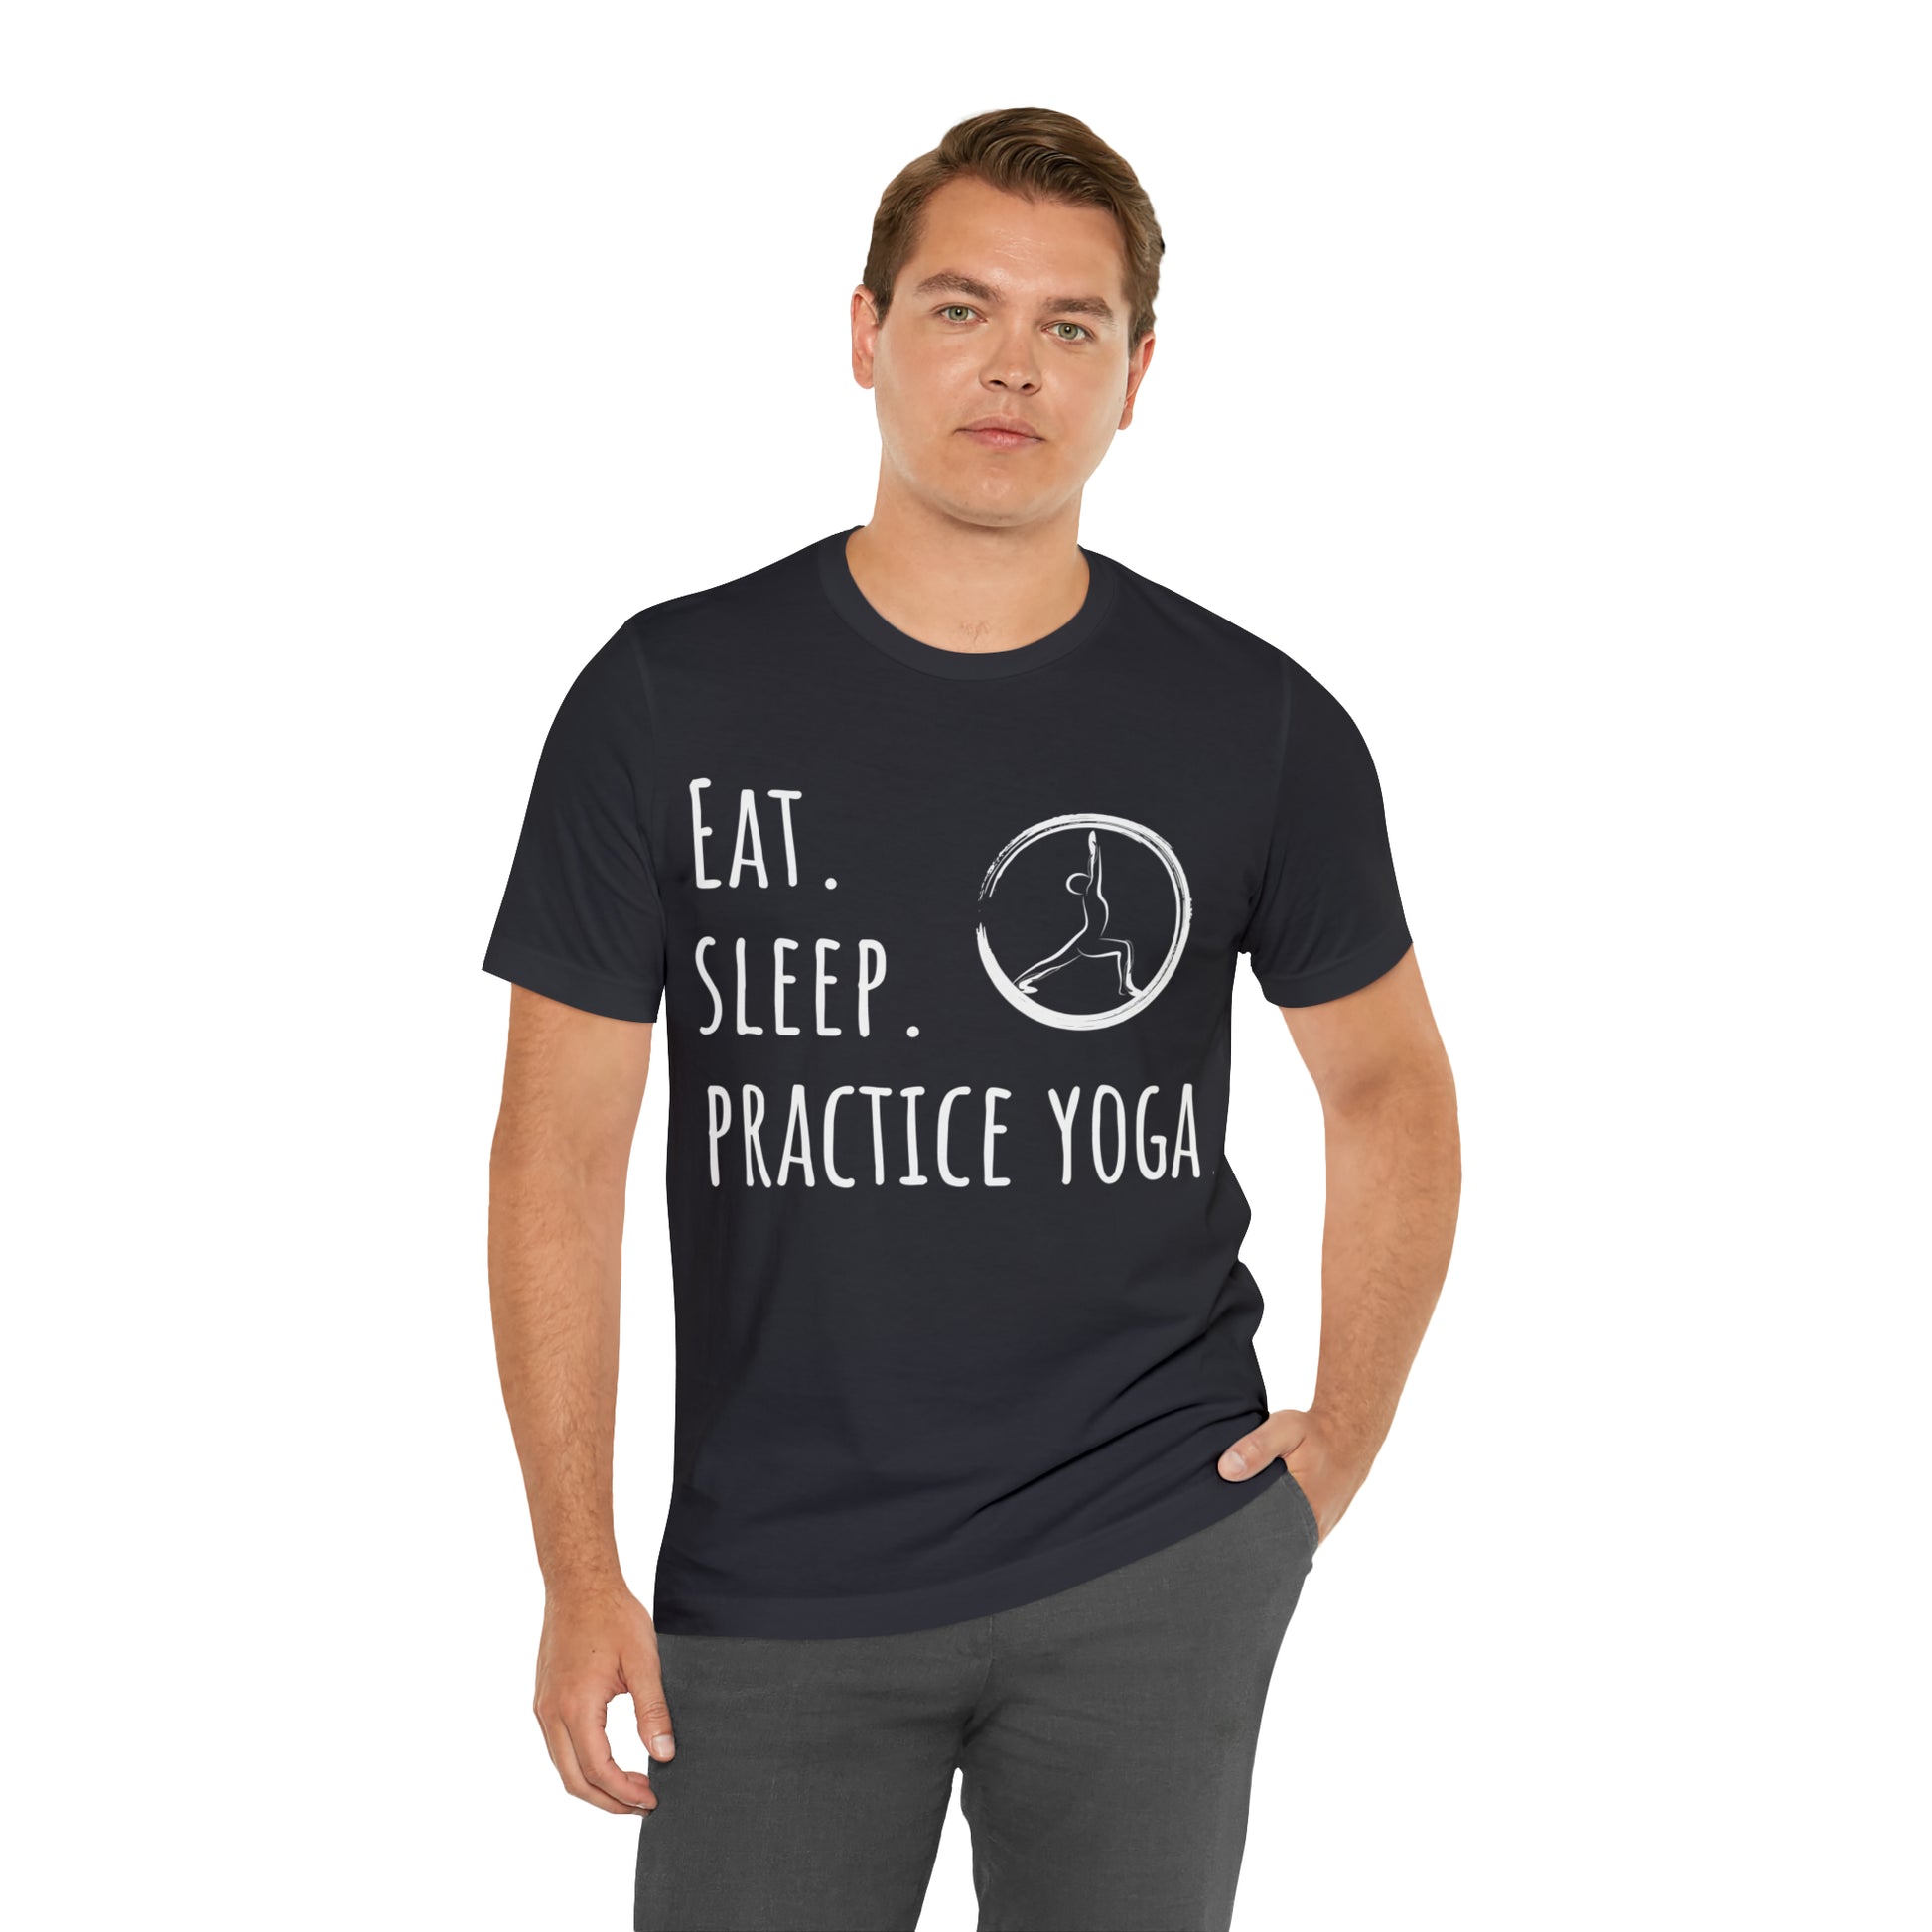 Eat. Sleep. Practice Yoga. T-Shirt - Arjuna Rigby Art and Lifestyle Store